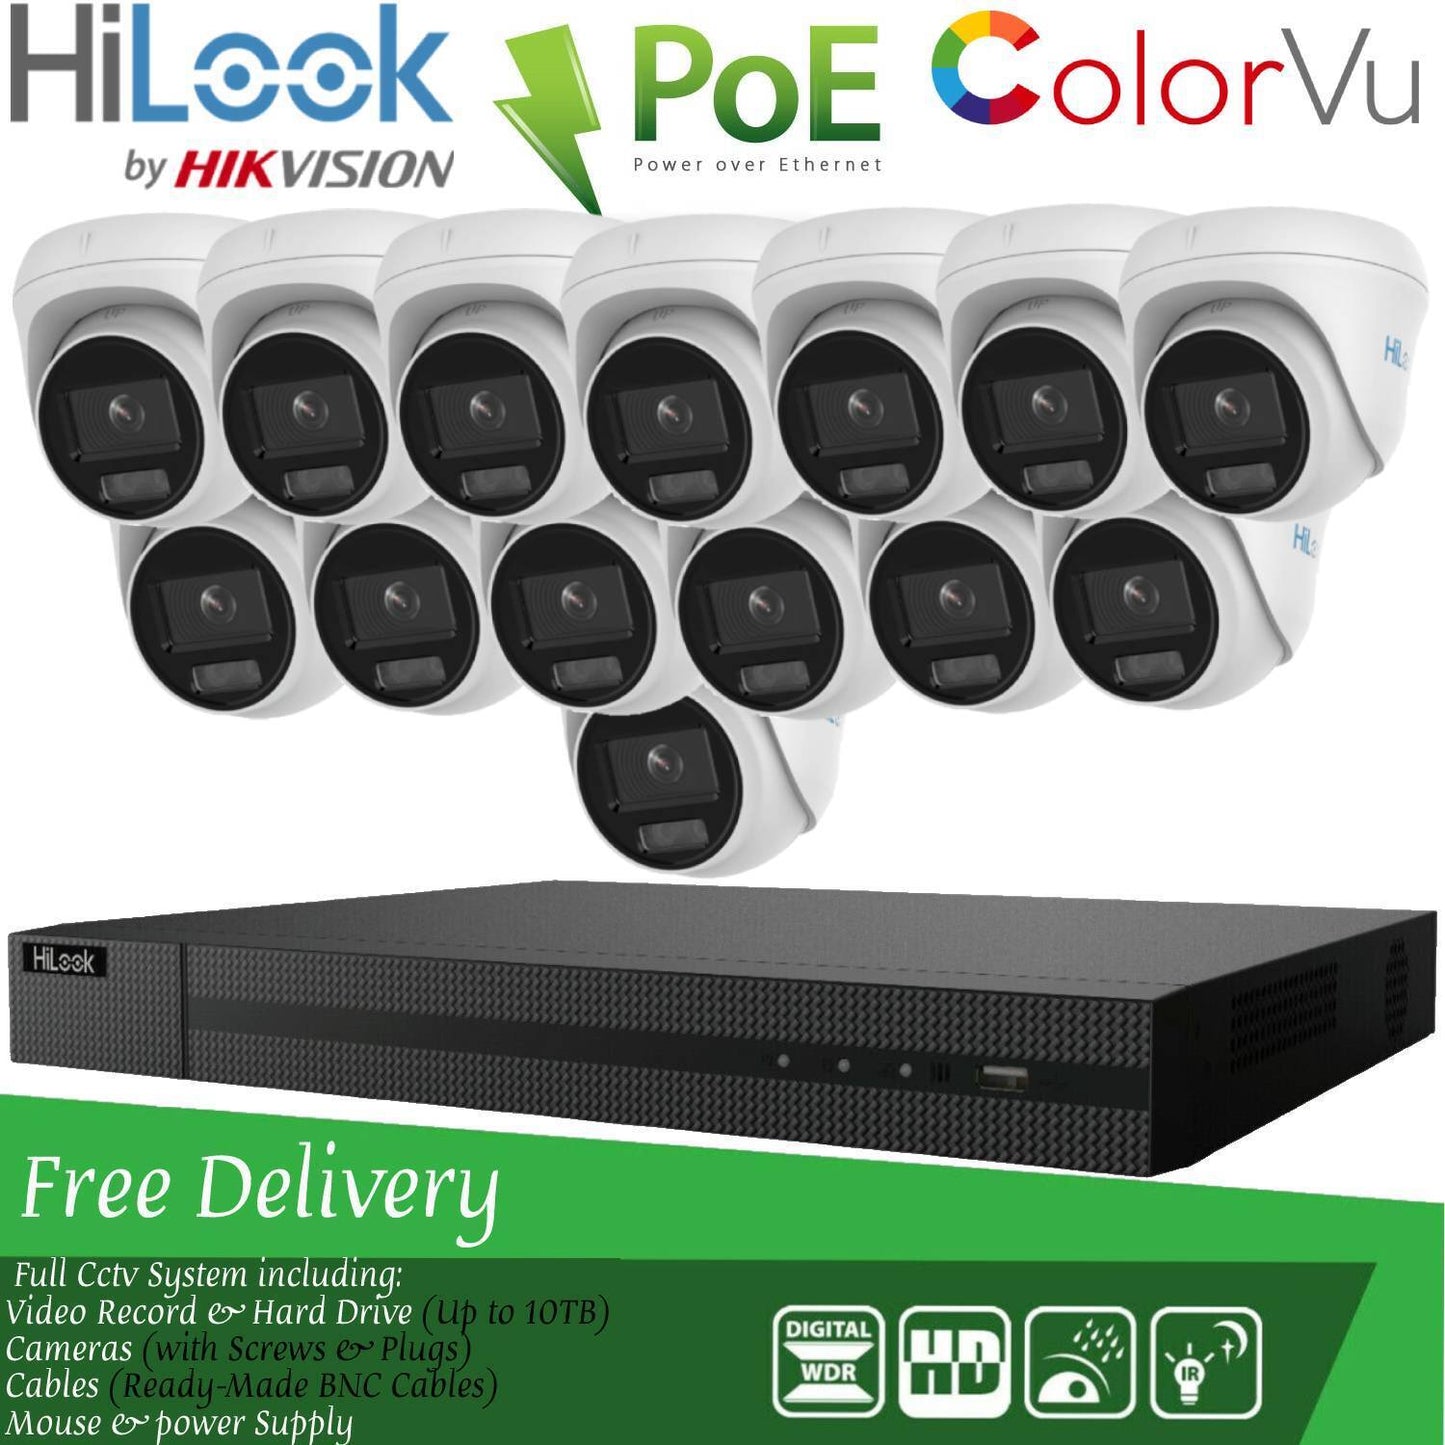 HIKVISION COLORVU POE CCTV SYSTEM IP UHD 8MP NVR 4K 5MP 24/7 COLORVU CAMERA KIT 16CH NVR 14x Cameras (white) 2TB HDD